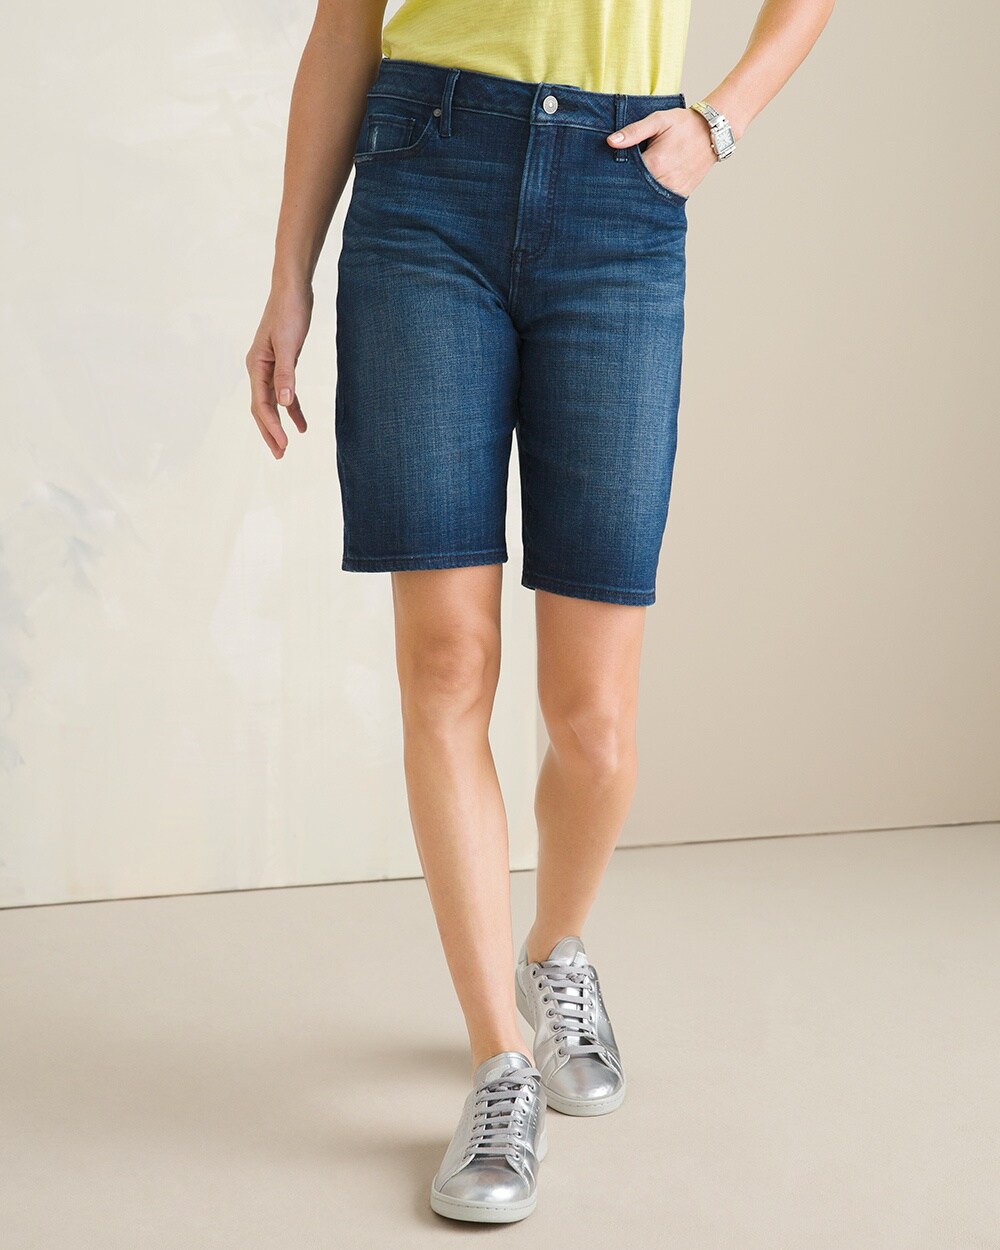 Women's So Slimming Pants: Slimming Jeans, Shorts, Leggins